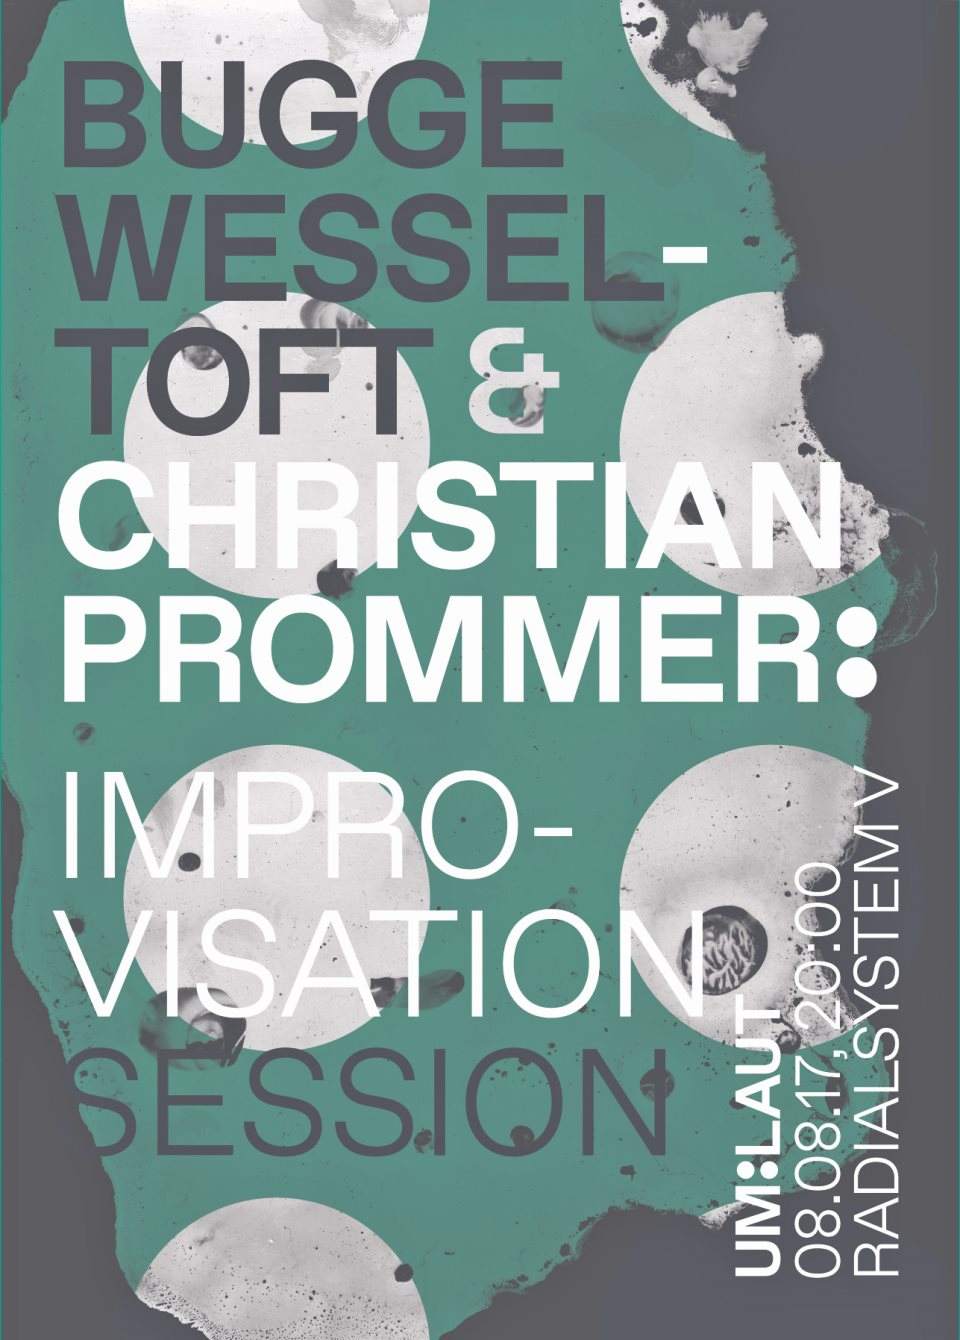 Bugge Wesseltoft & Christian Prommer - Página trasera